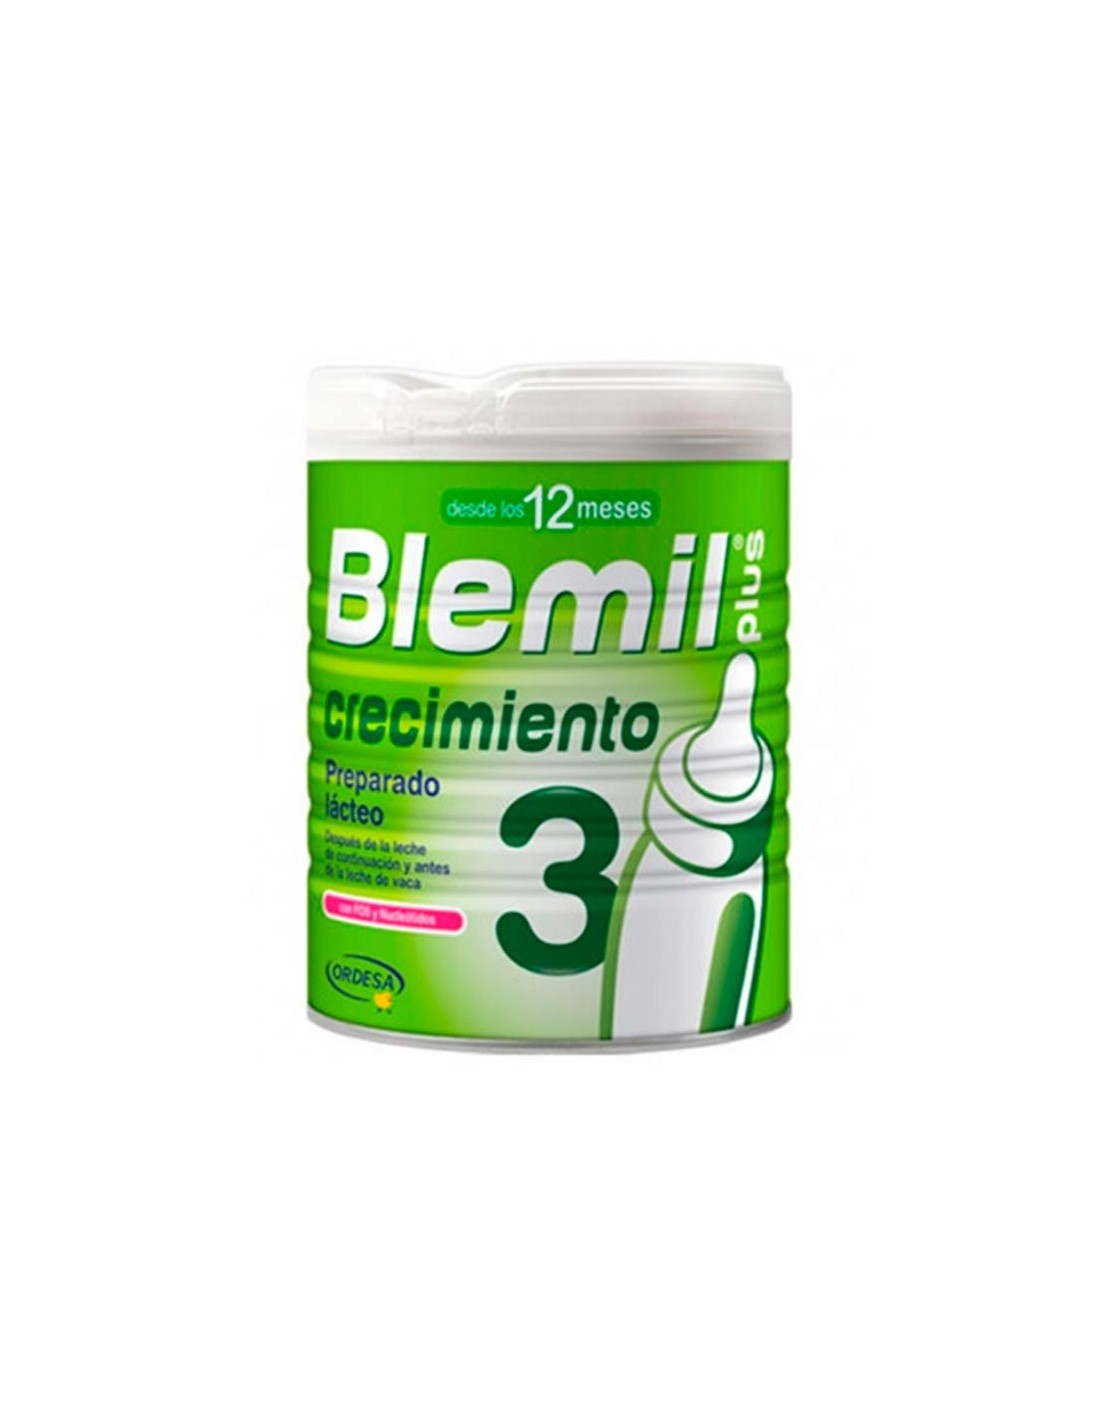 Comprar Blemil plus 3 crecimiento formato ahorro 1200 g Blemil